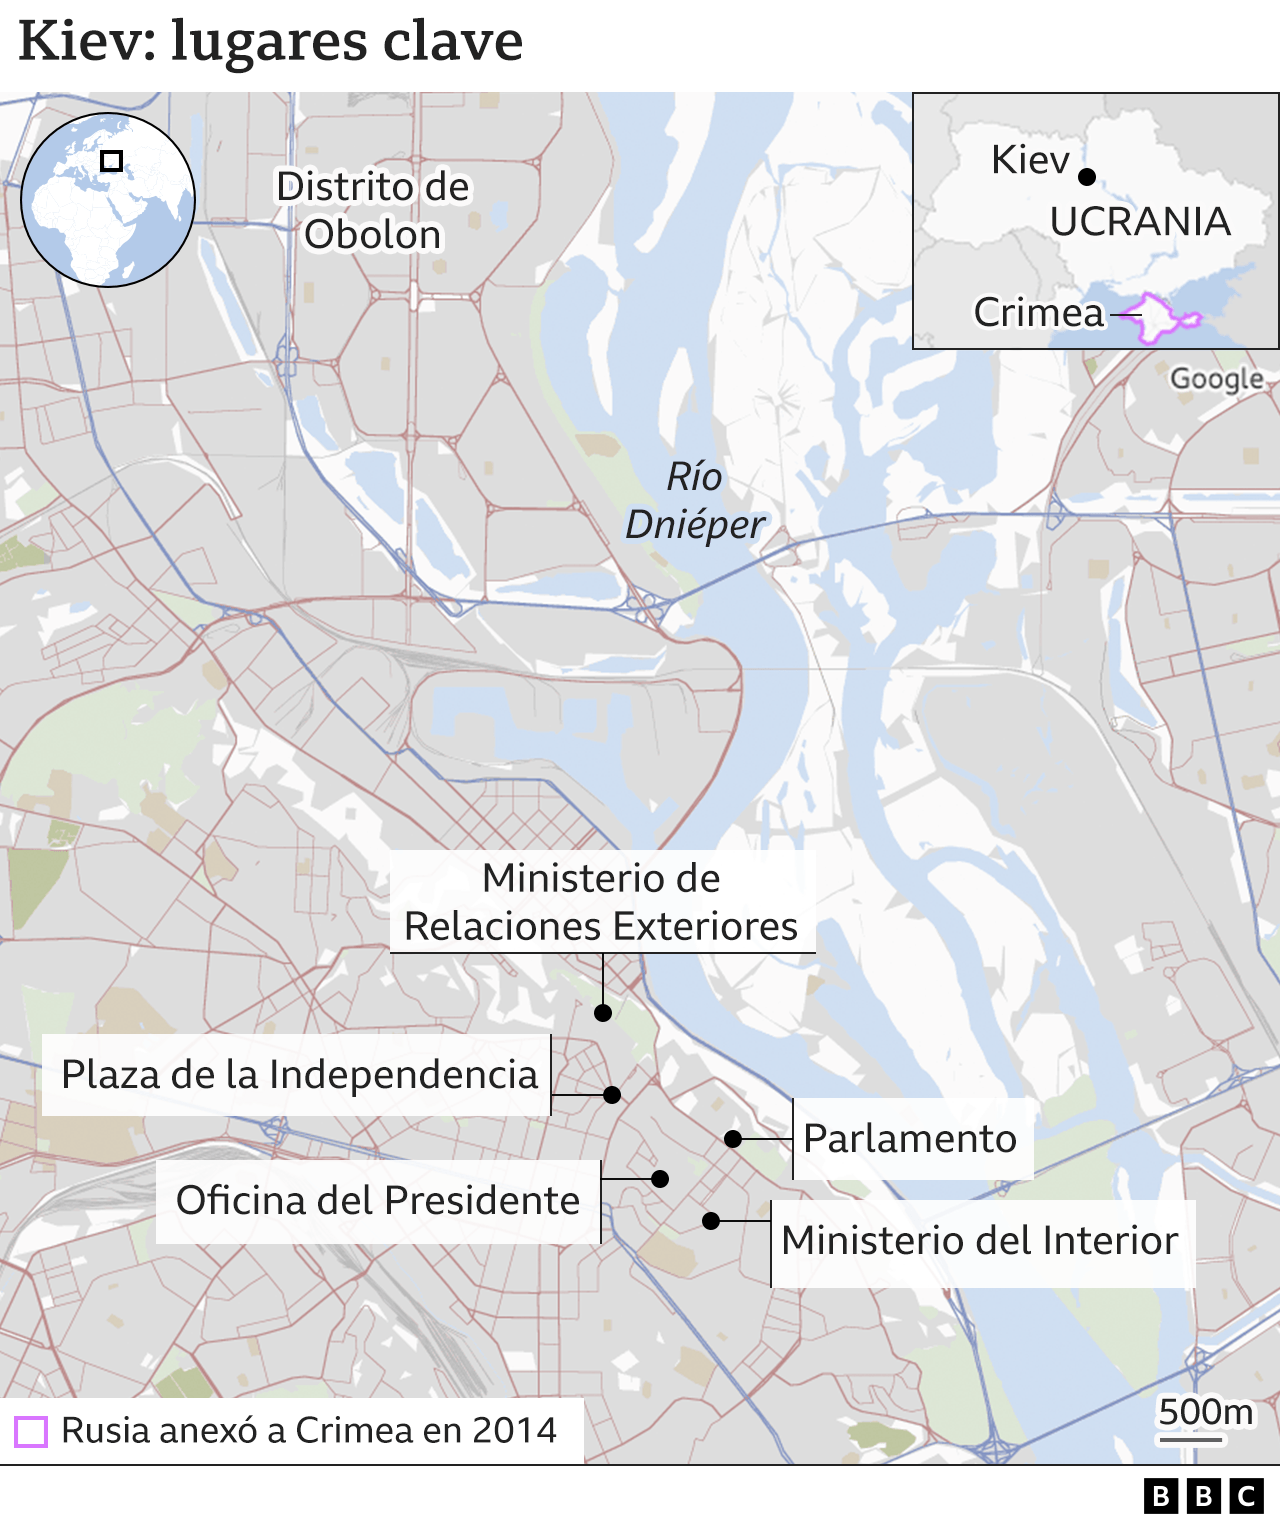 Mapa de lugares clave de Kiev, capital de Ucrania